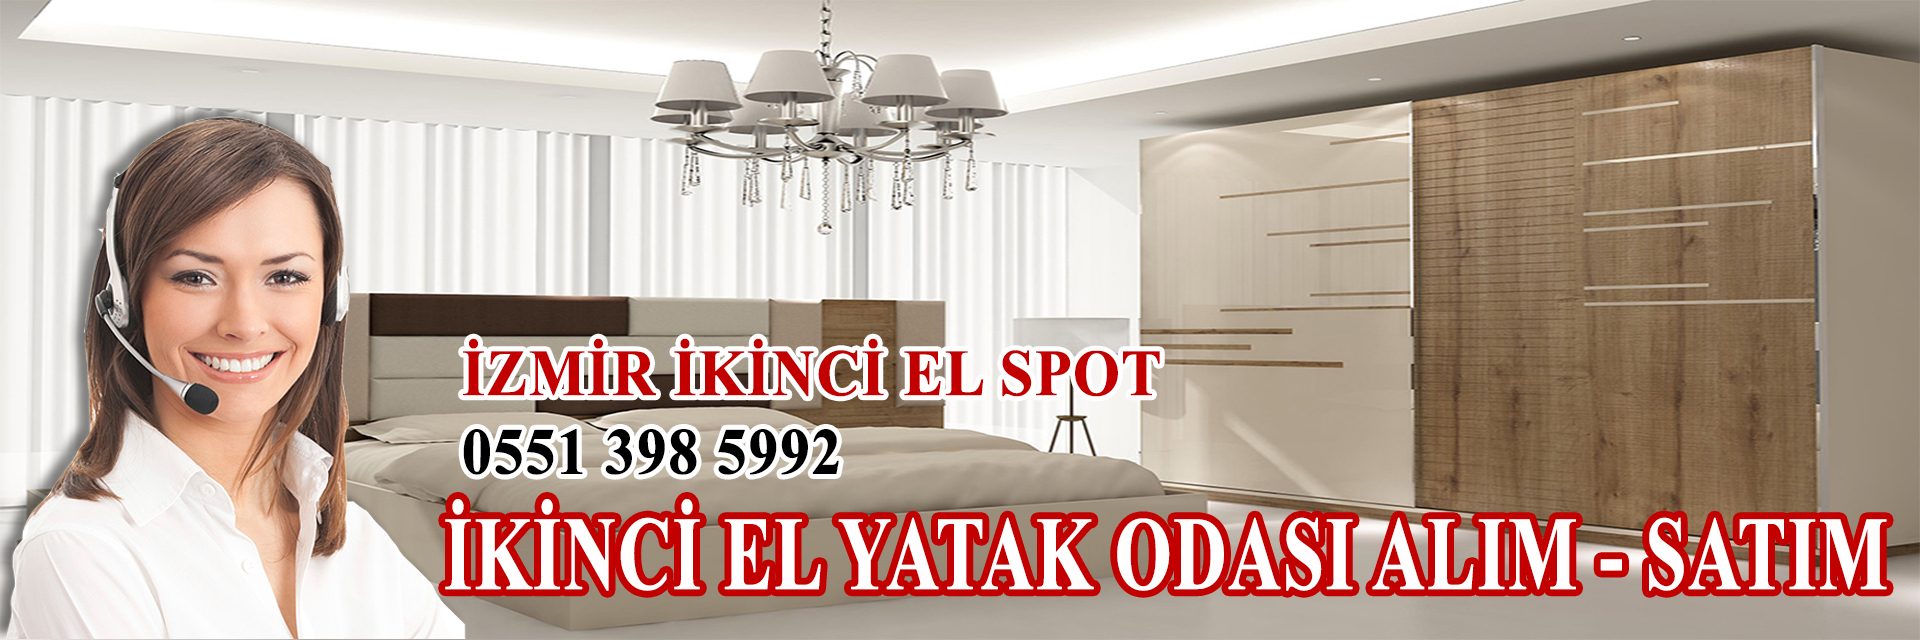 Ayaz Spot Eşya İzmir 0551 398 5992 İzmir İkinci El Spot Eşya www